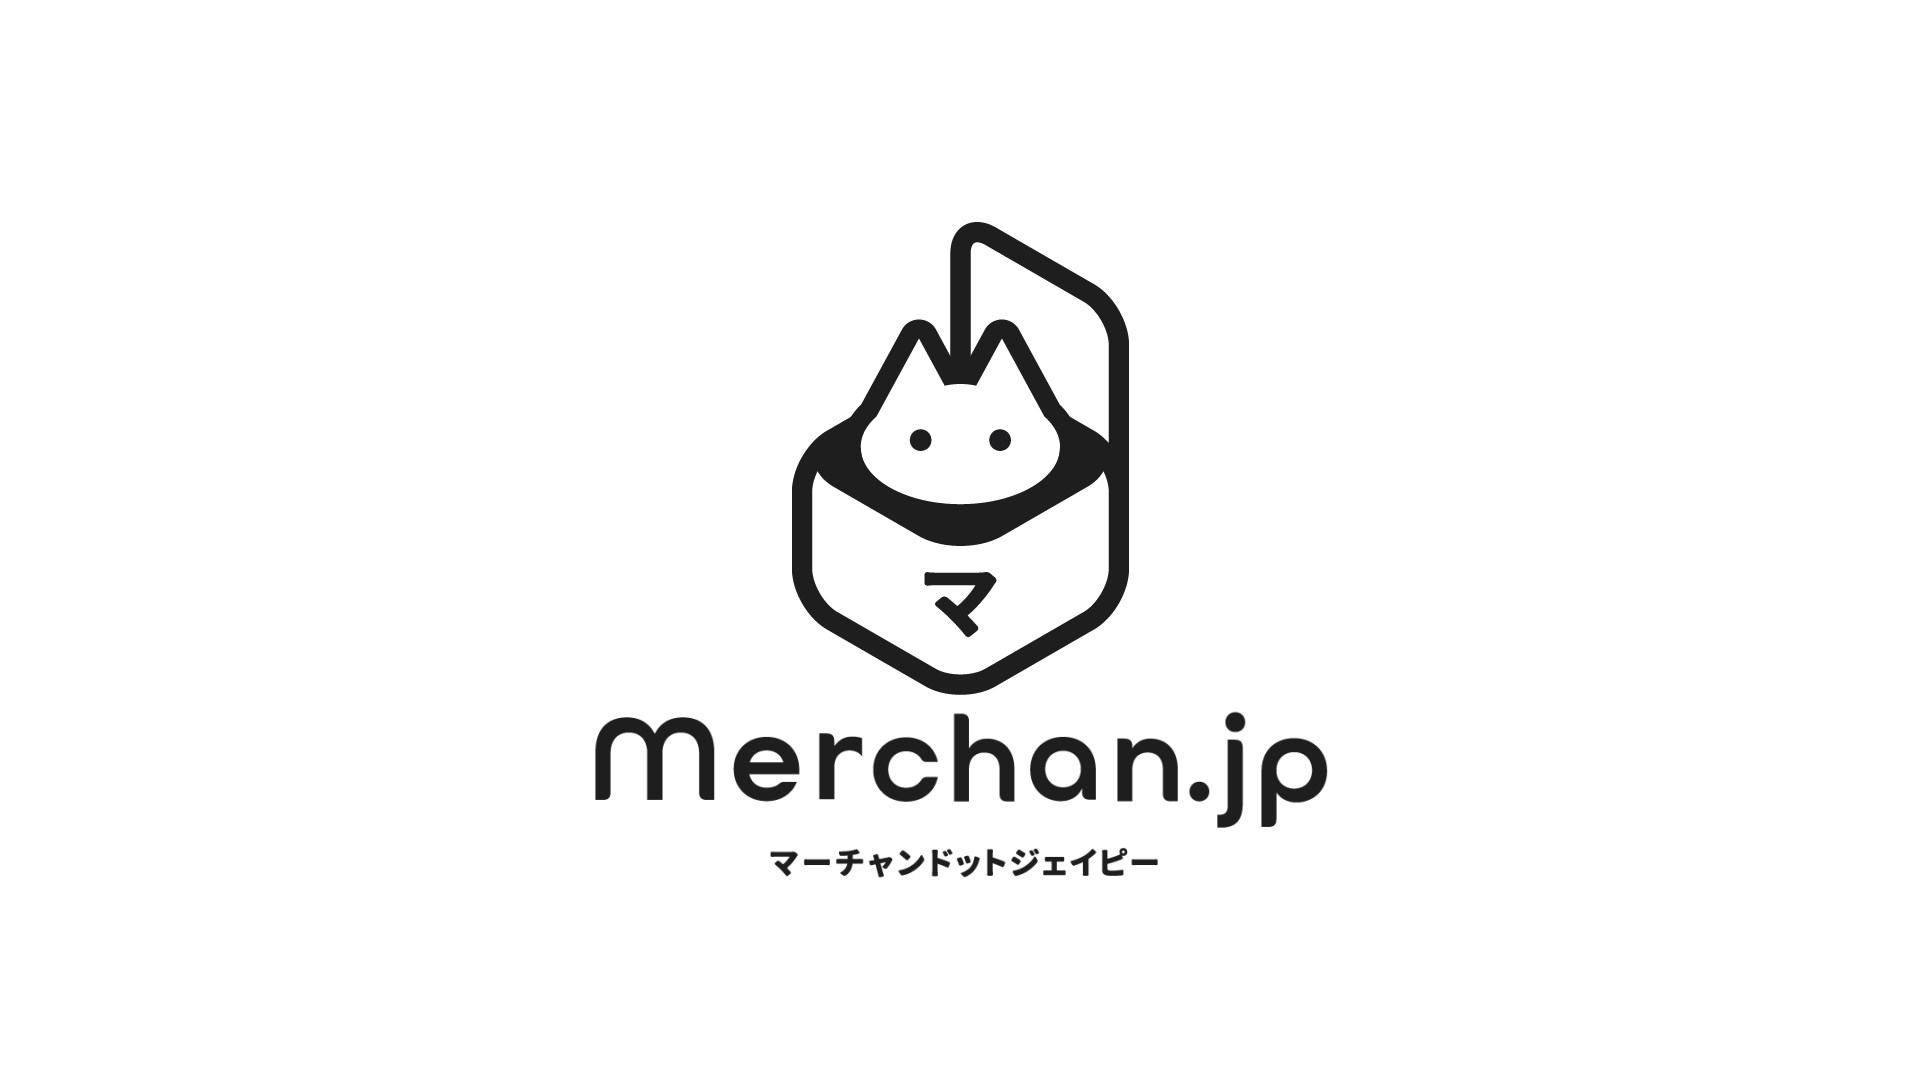 Merchan.jp アプリの使い方紹介映像